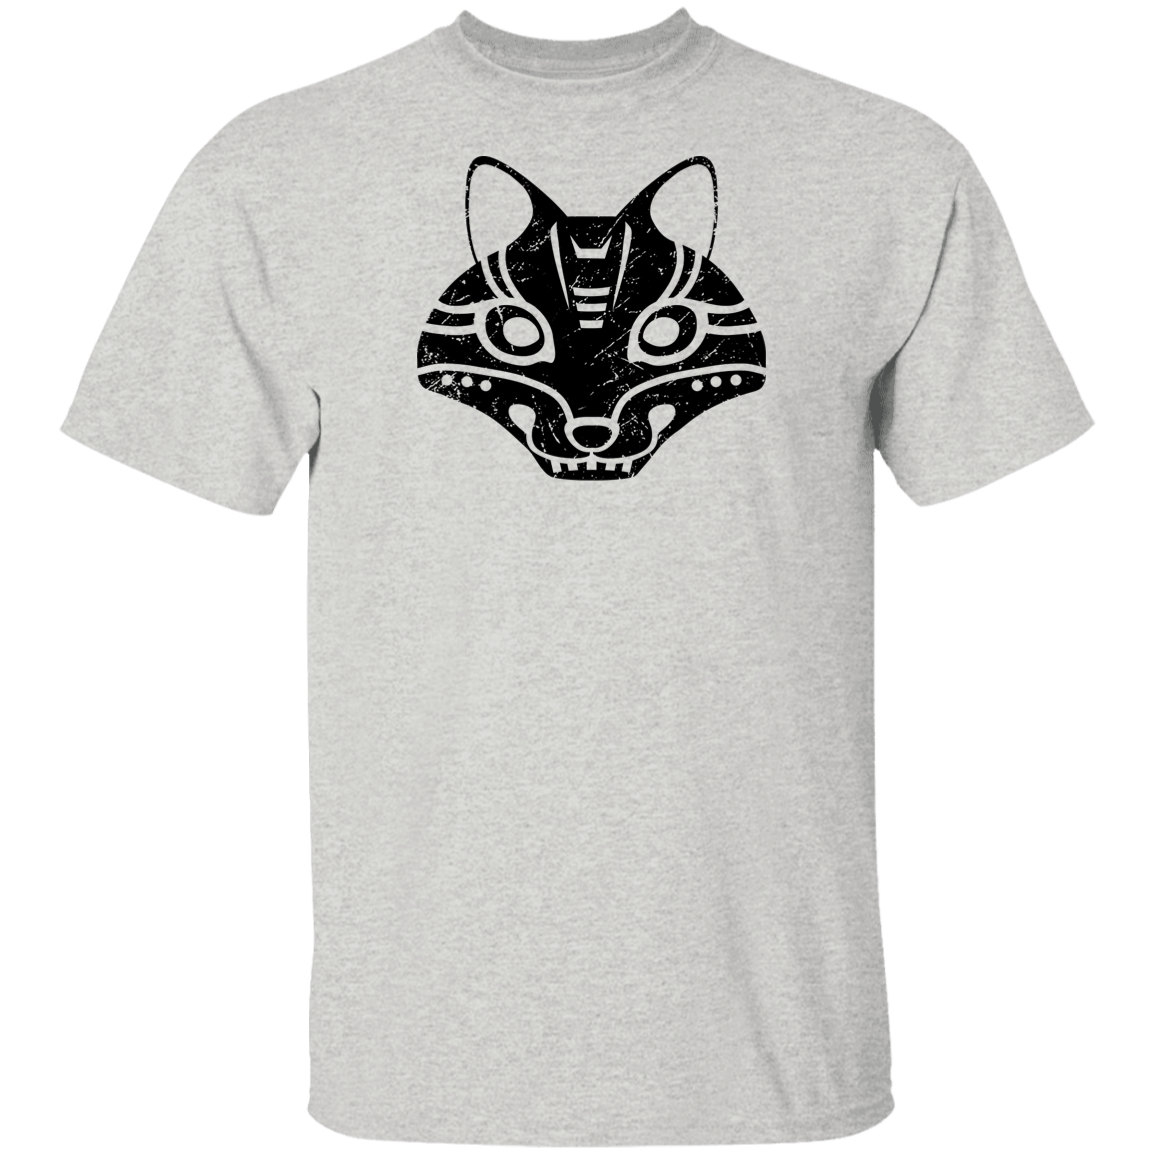 Black Distressed Emblem T-Shirt for Kids (Fox/Sly)